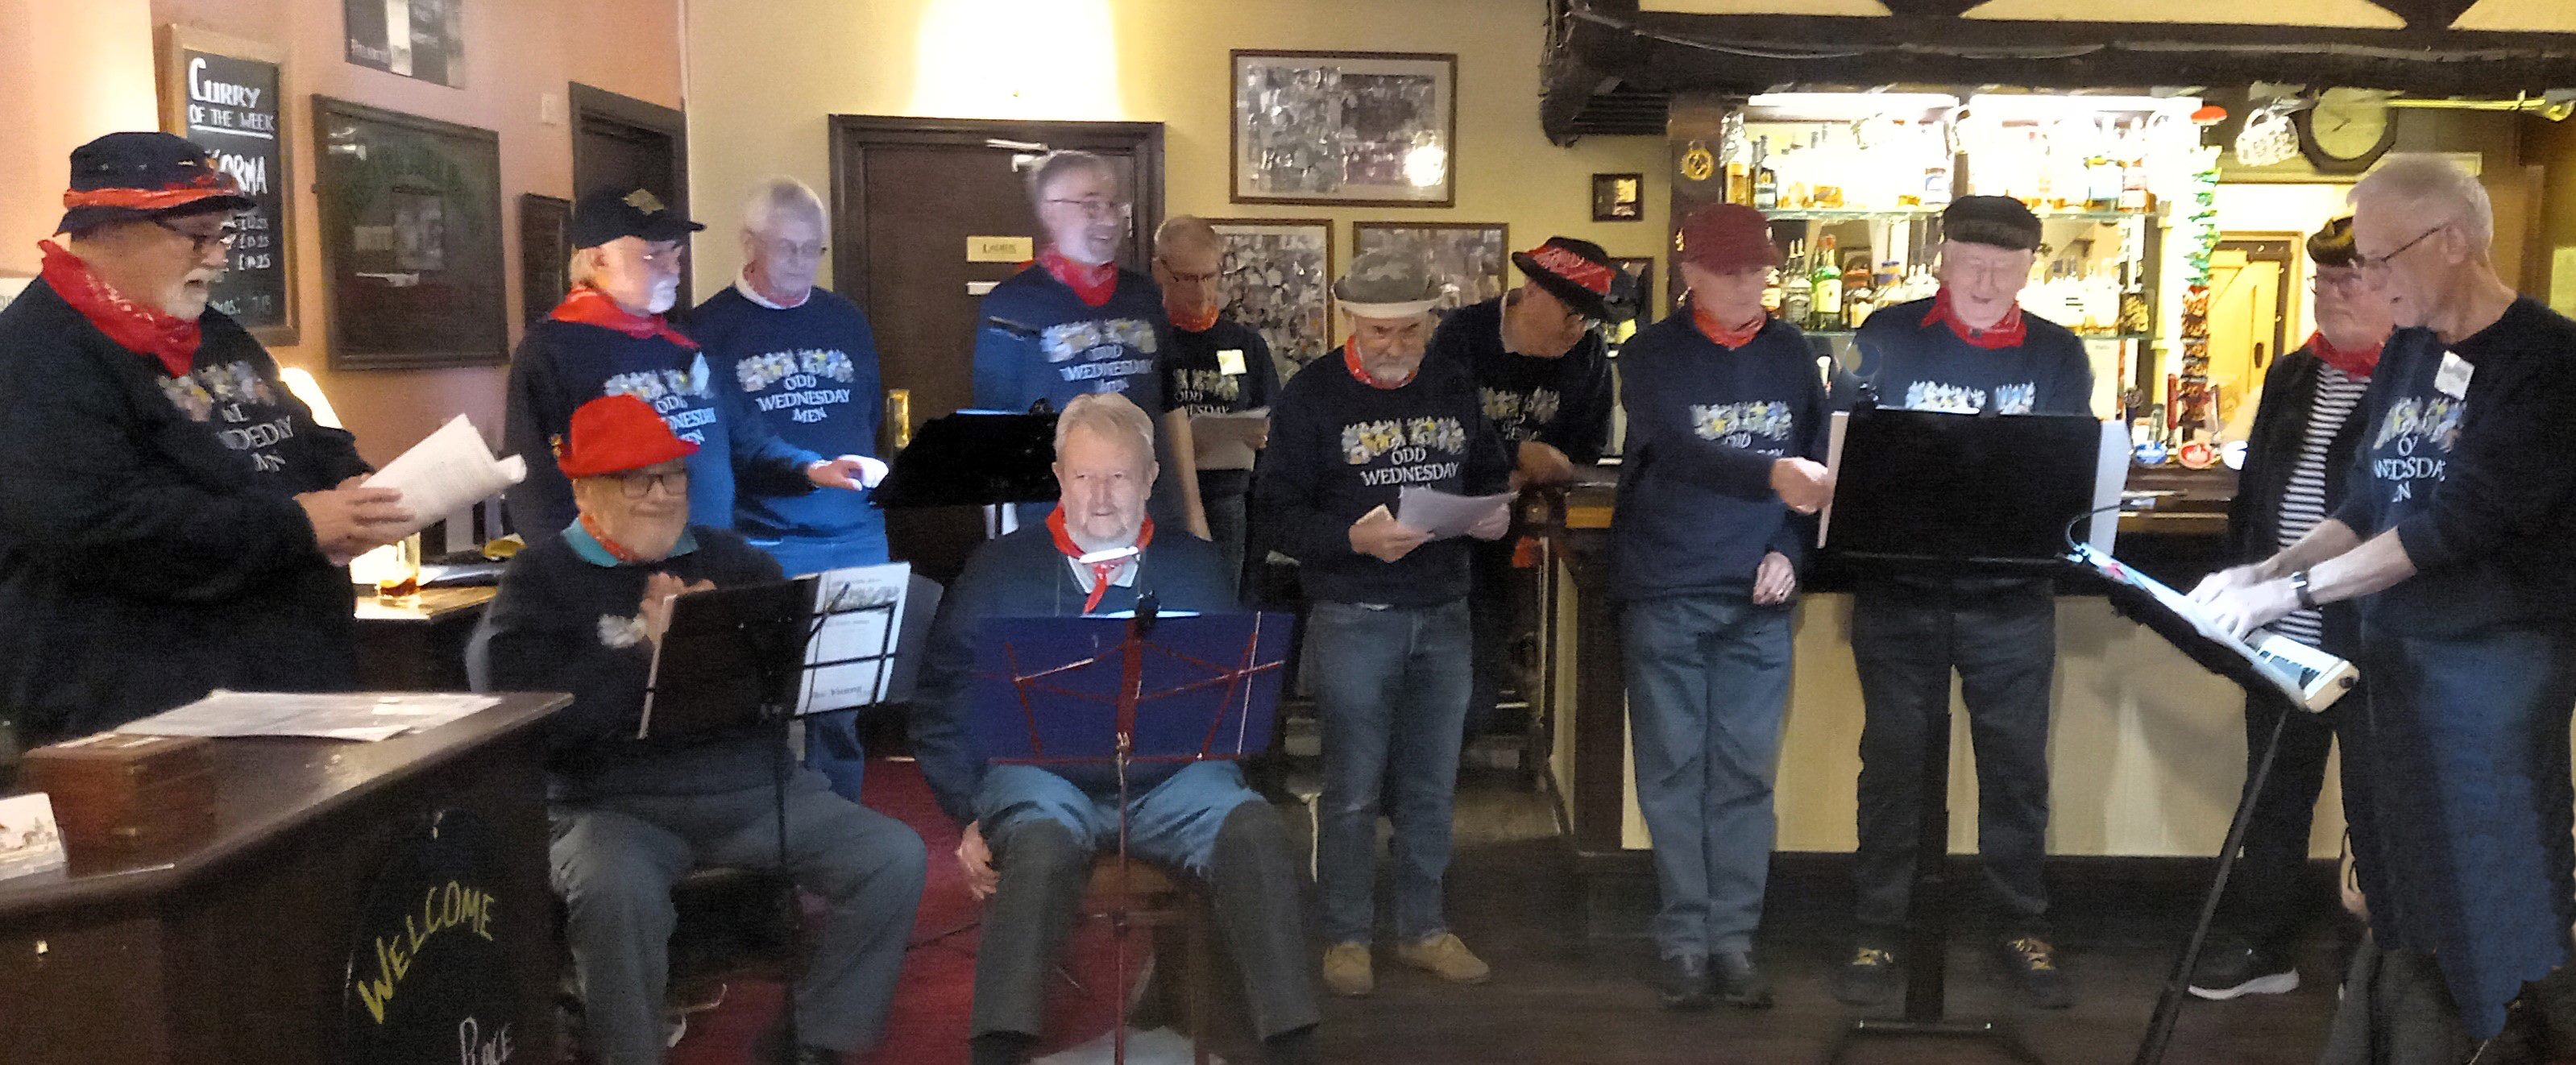 Odd Wenesday Men - Singing Group